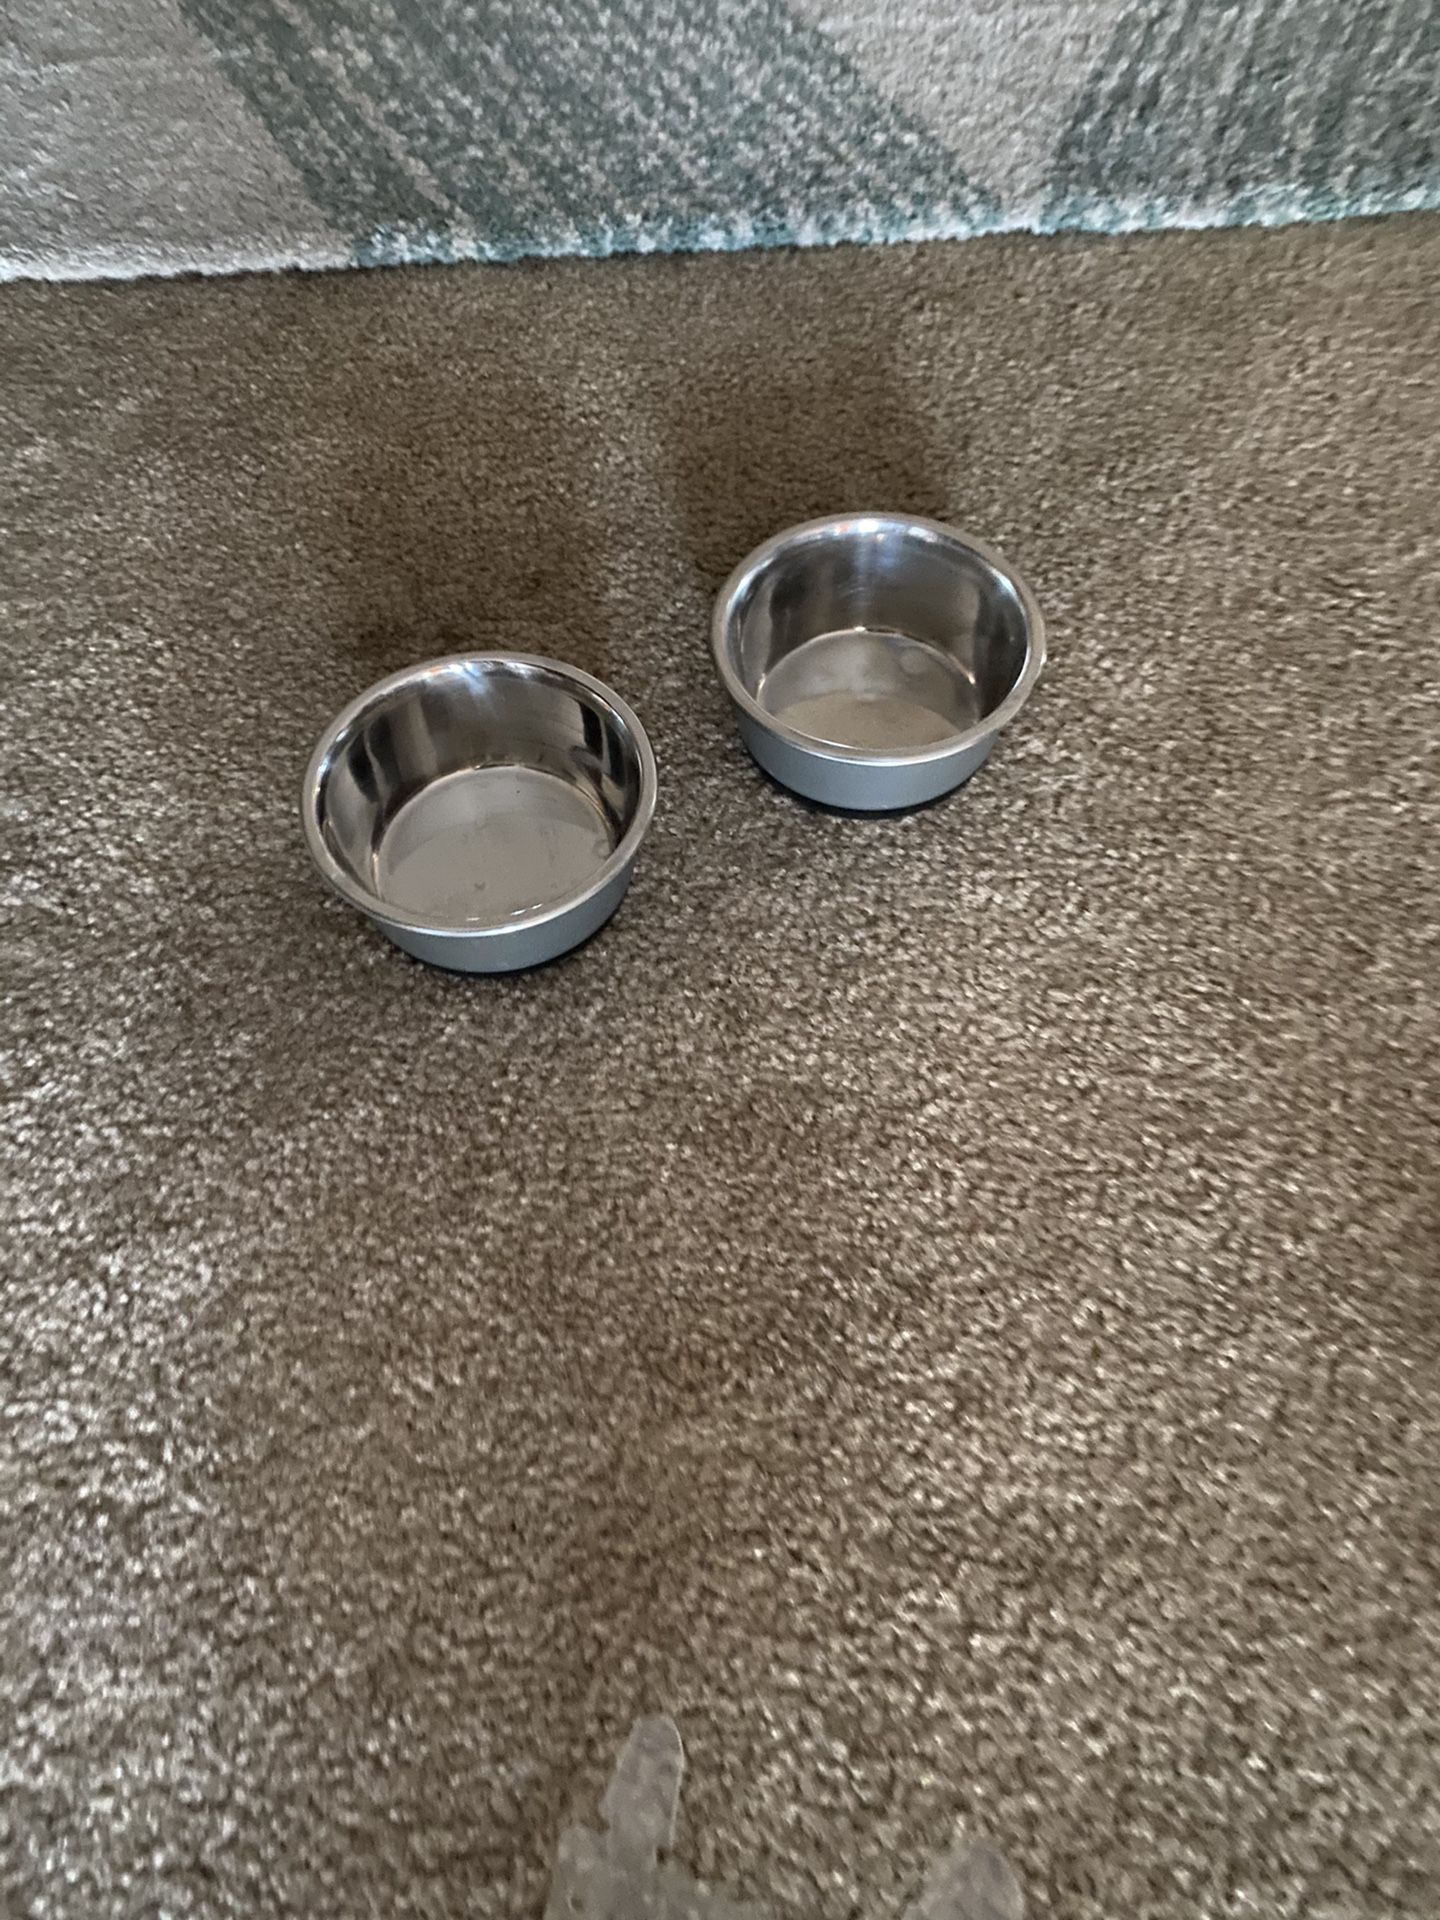 Dog food/water bowls - free